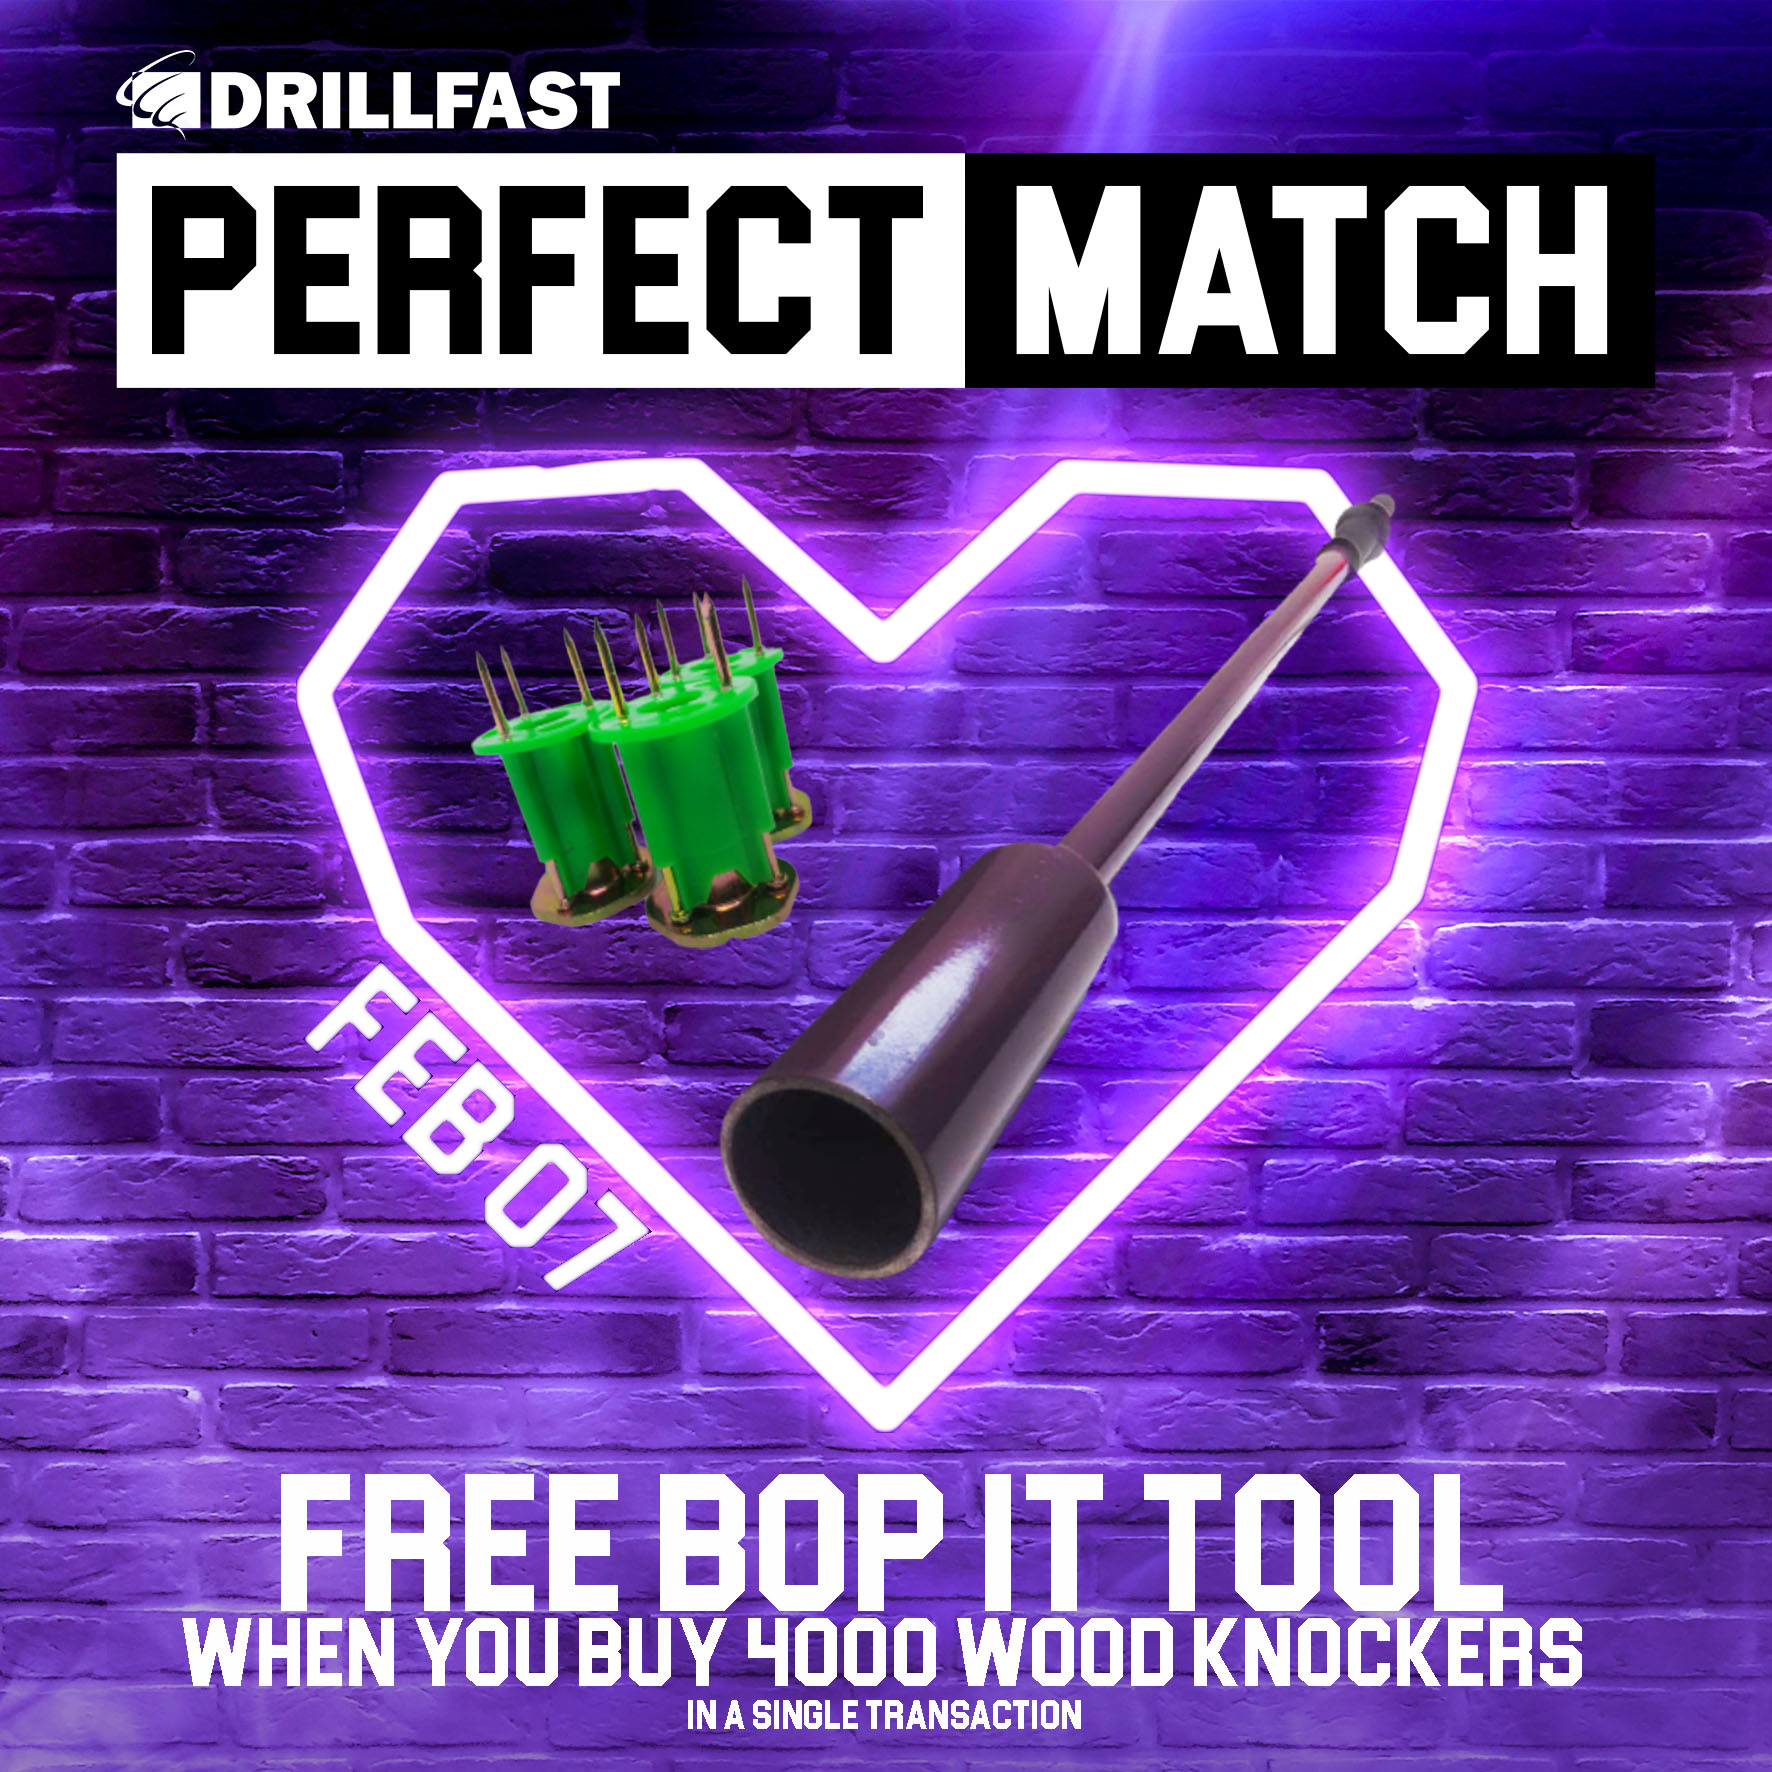 perfect match Bop it tool deal